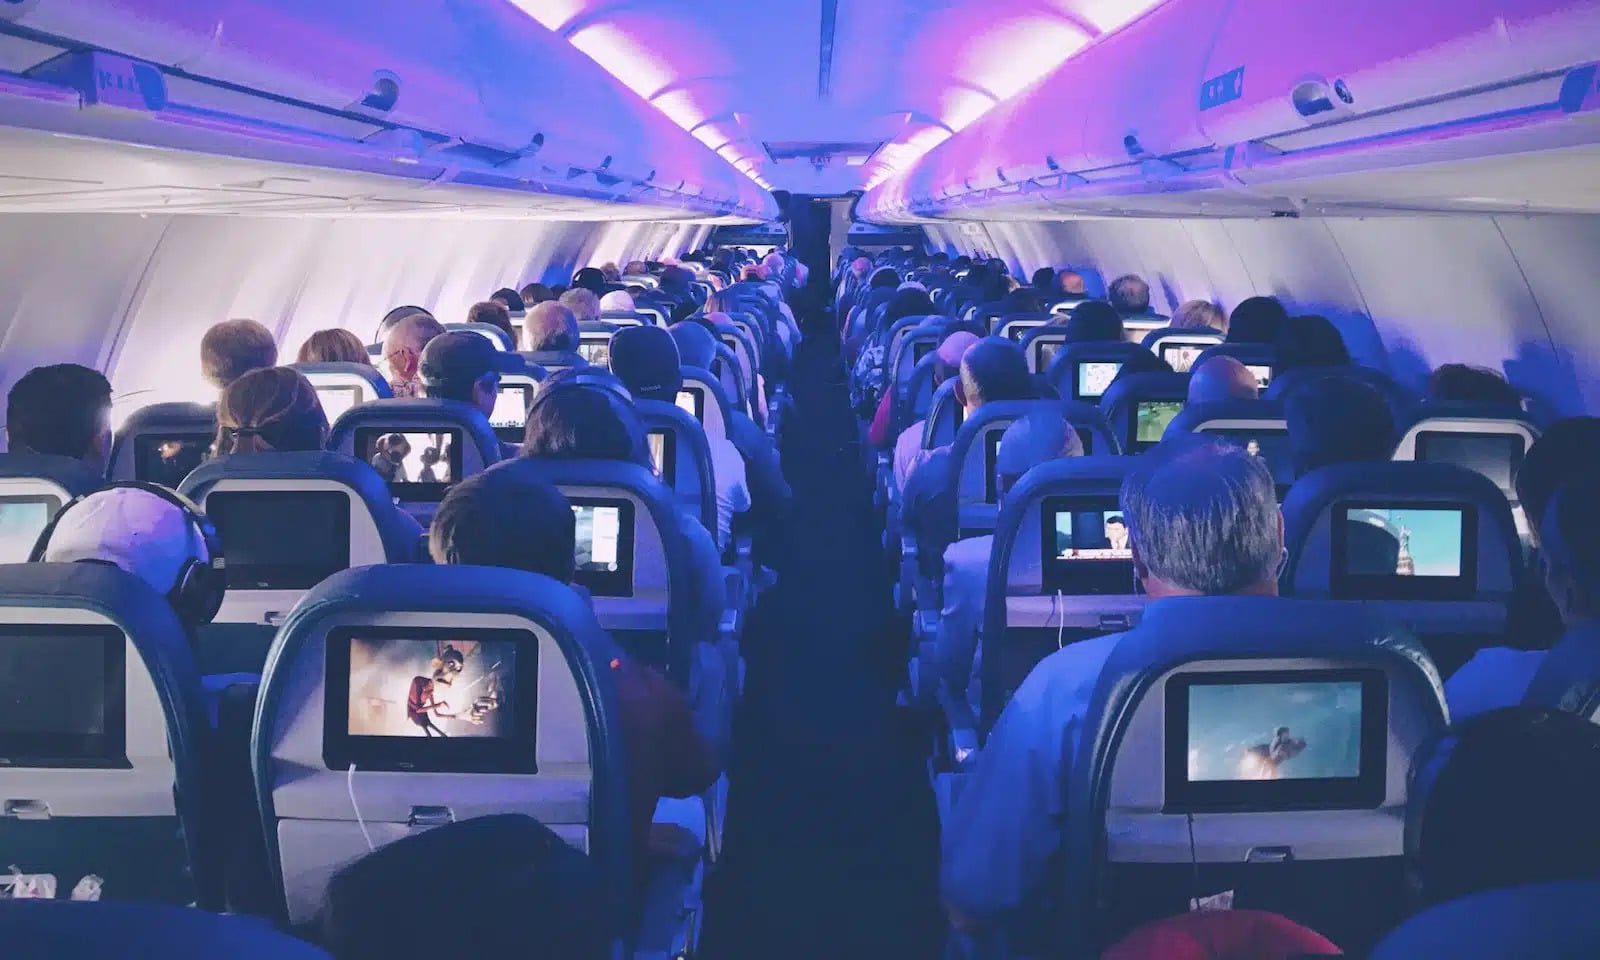 Cheap international flights: passengers watching movies in an airplane